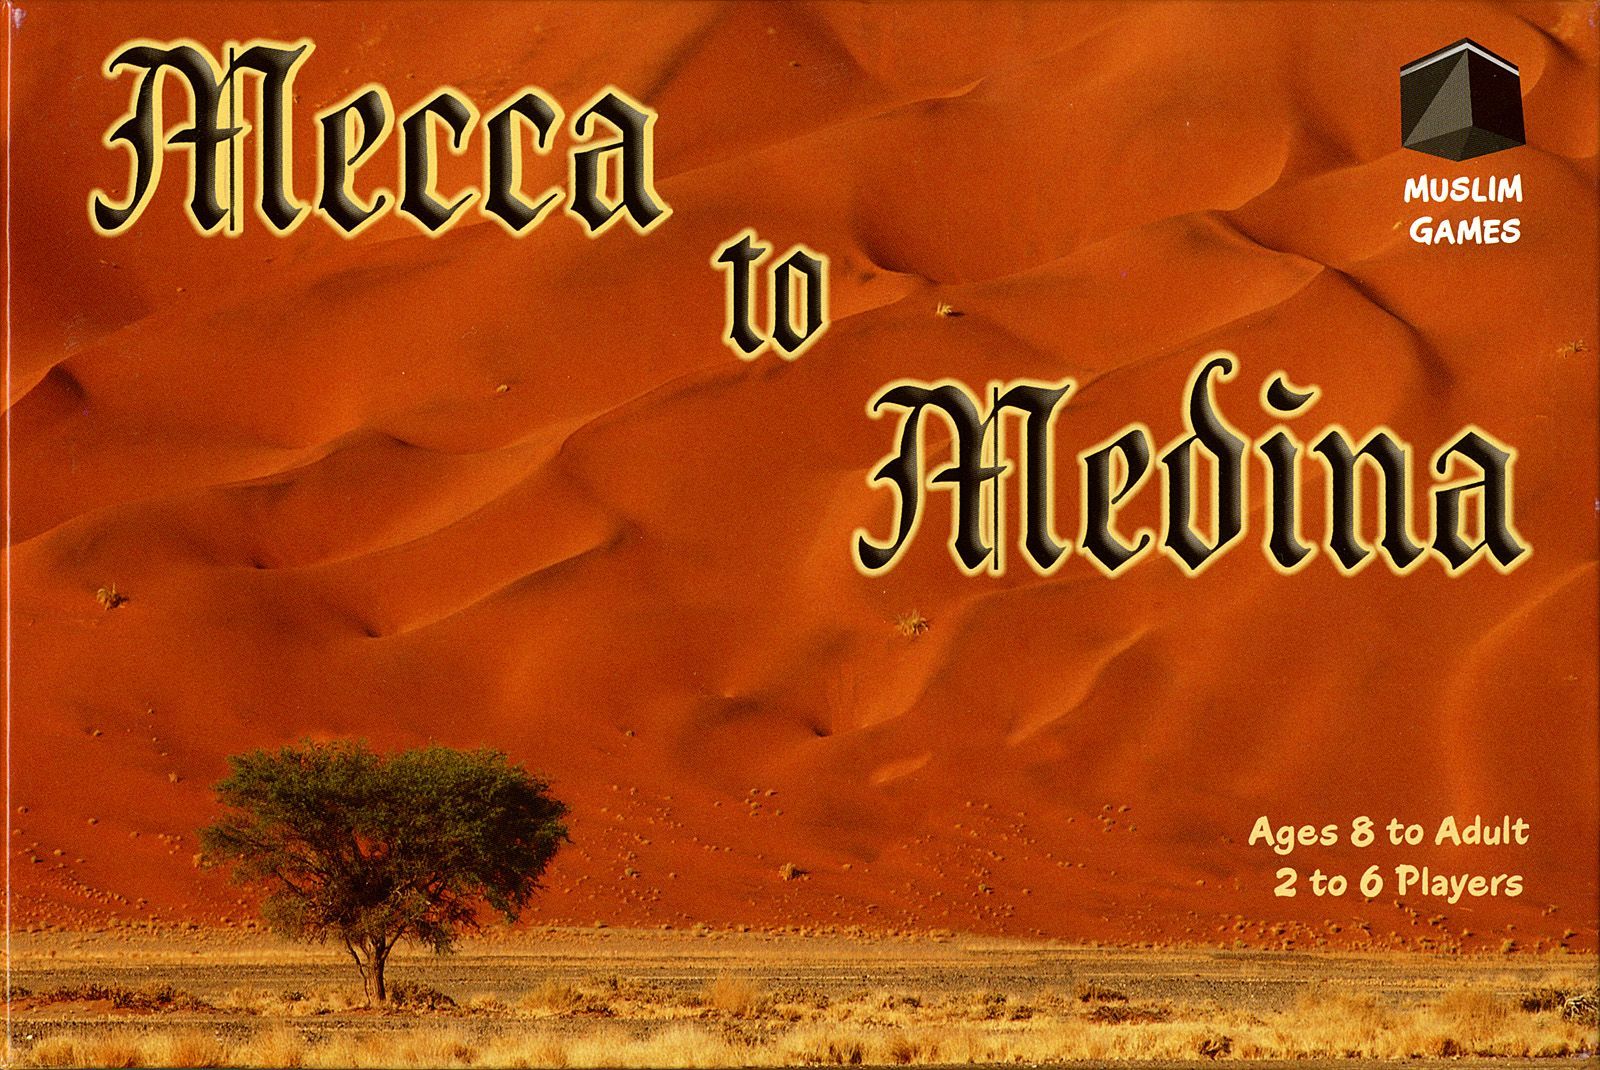 Mecca to Medina